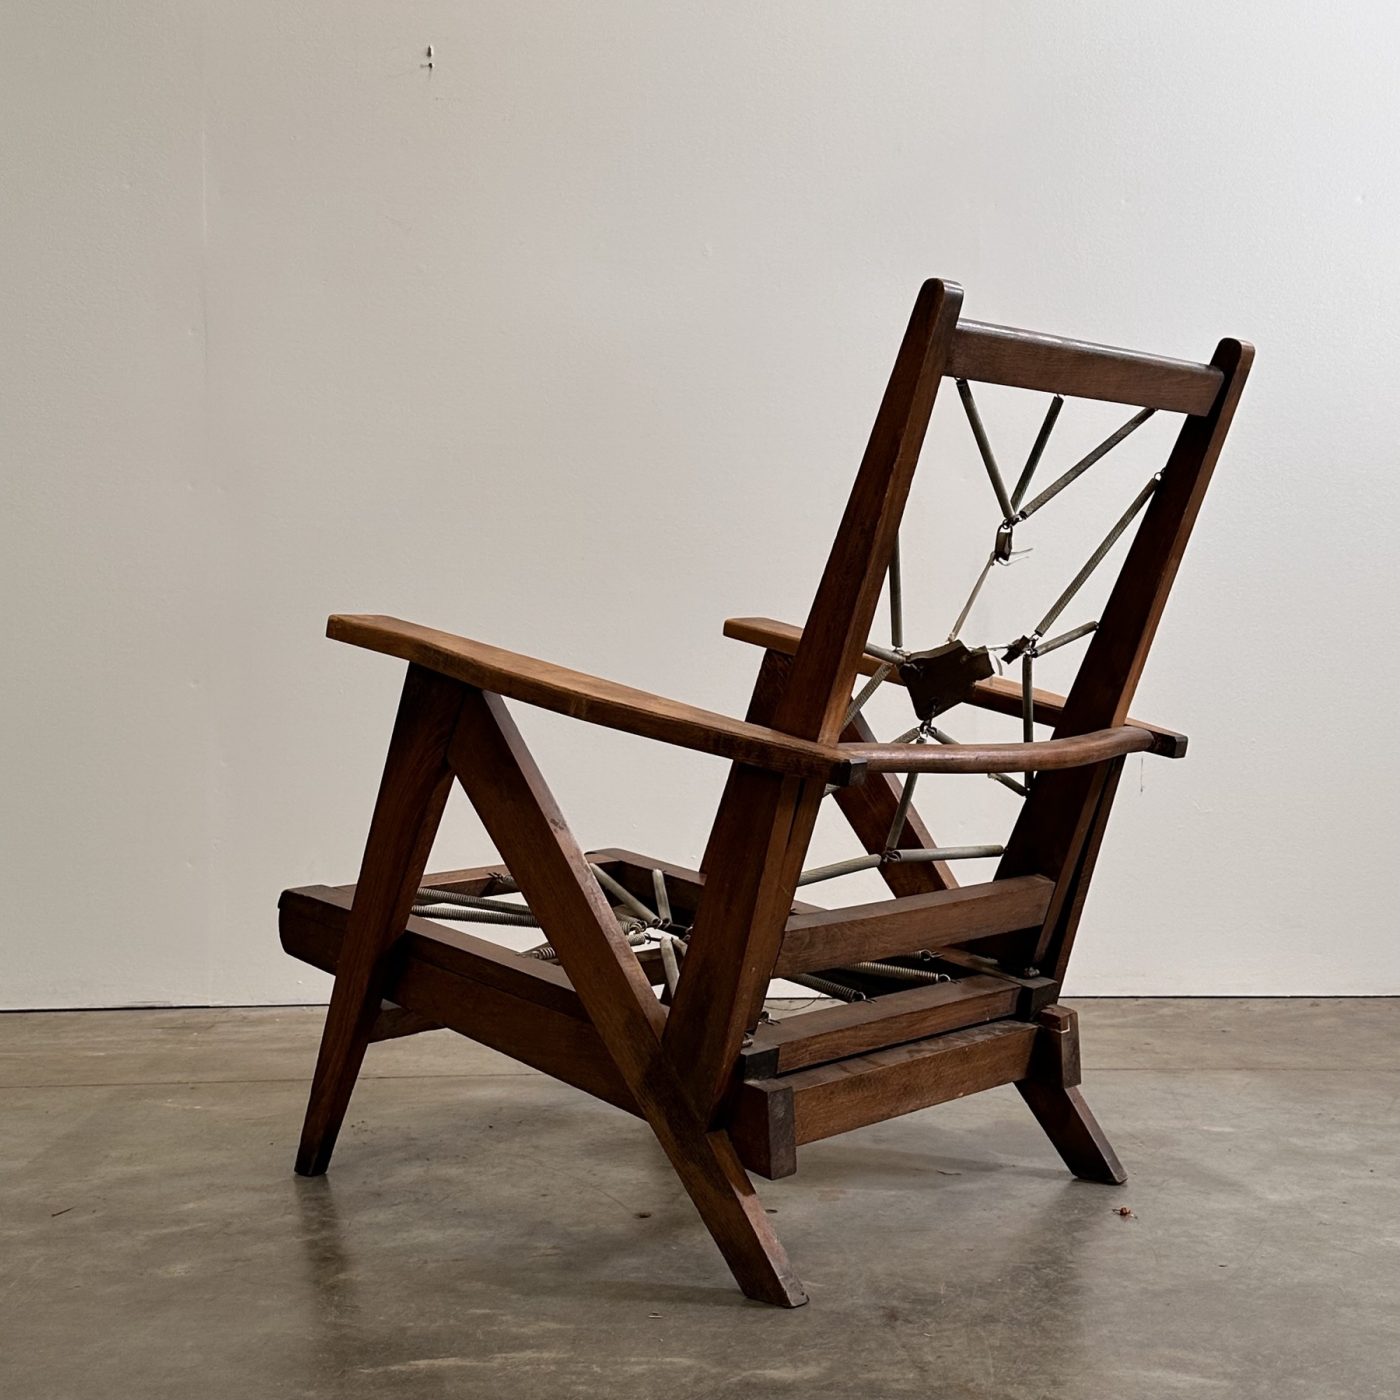 objet-vagabond-reconstruction-armchairs0003